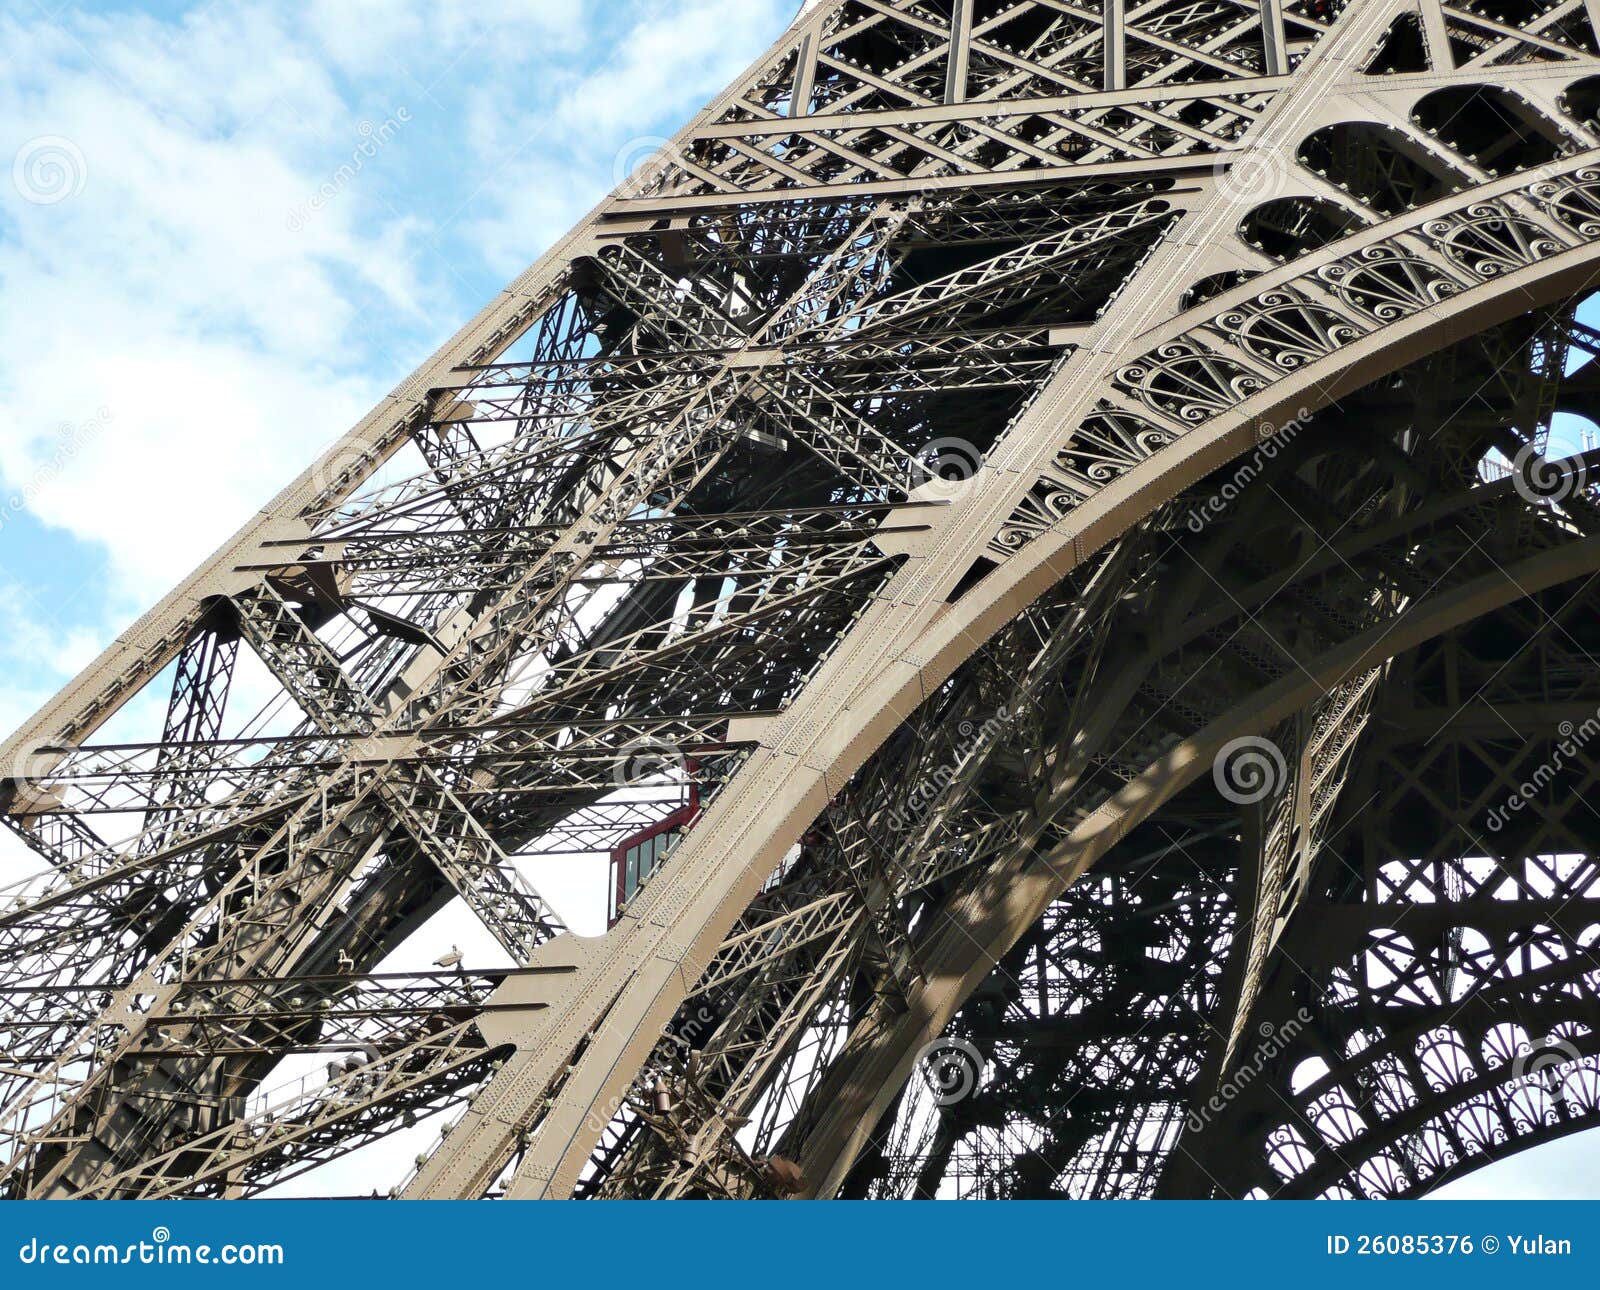 Eiffel tower - details stock photo. Image of rust, garden - 26085376